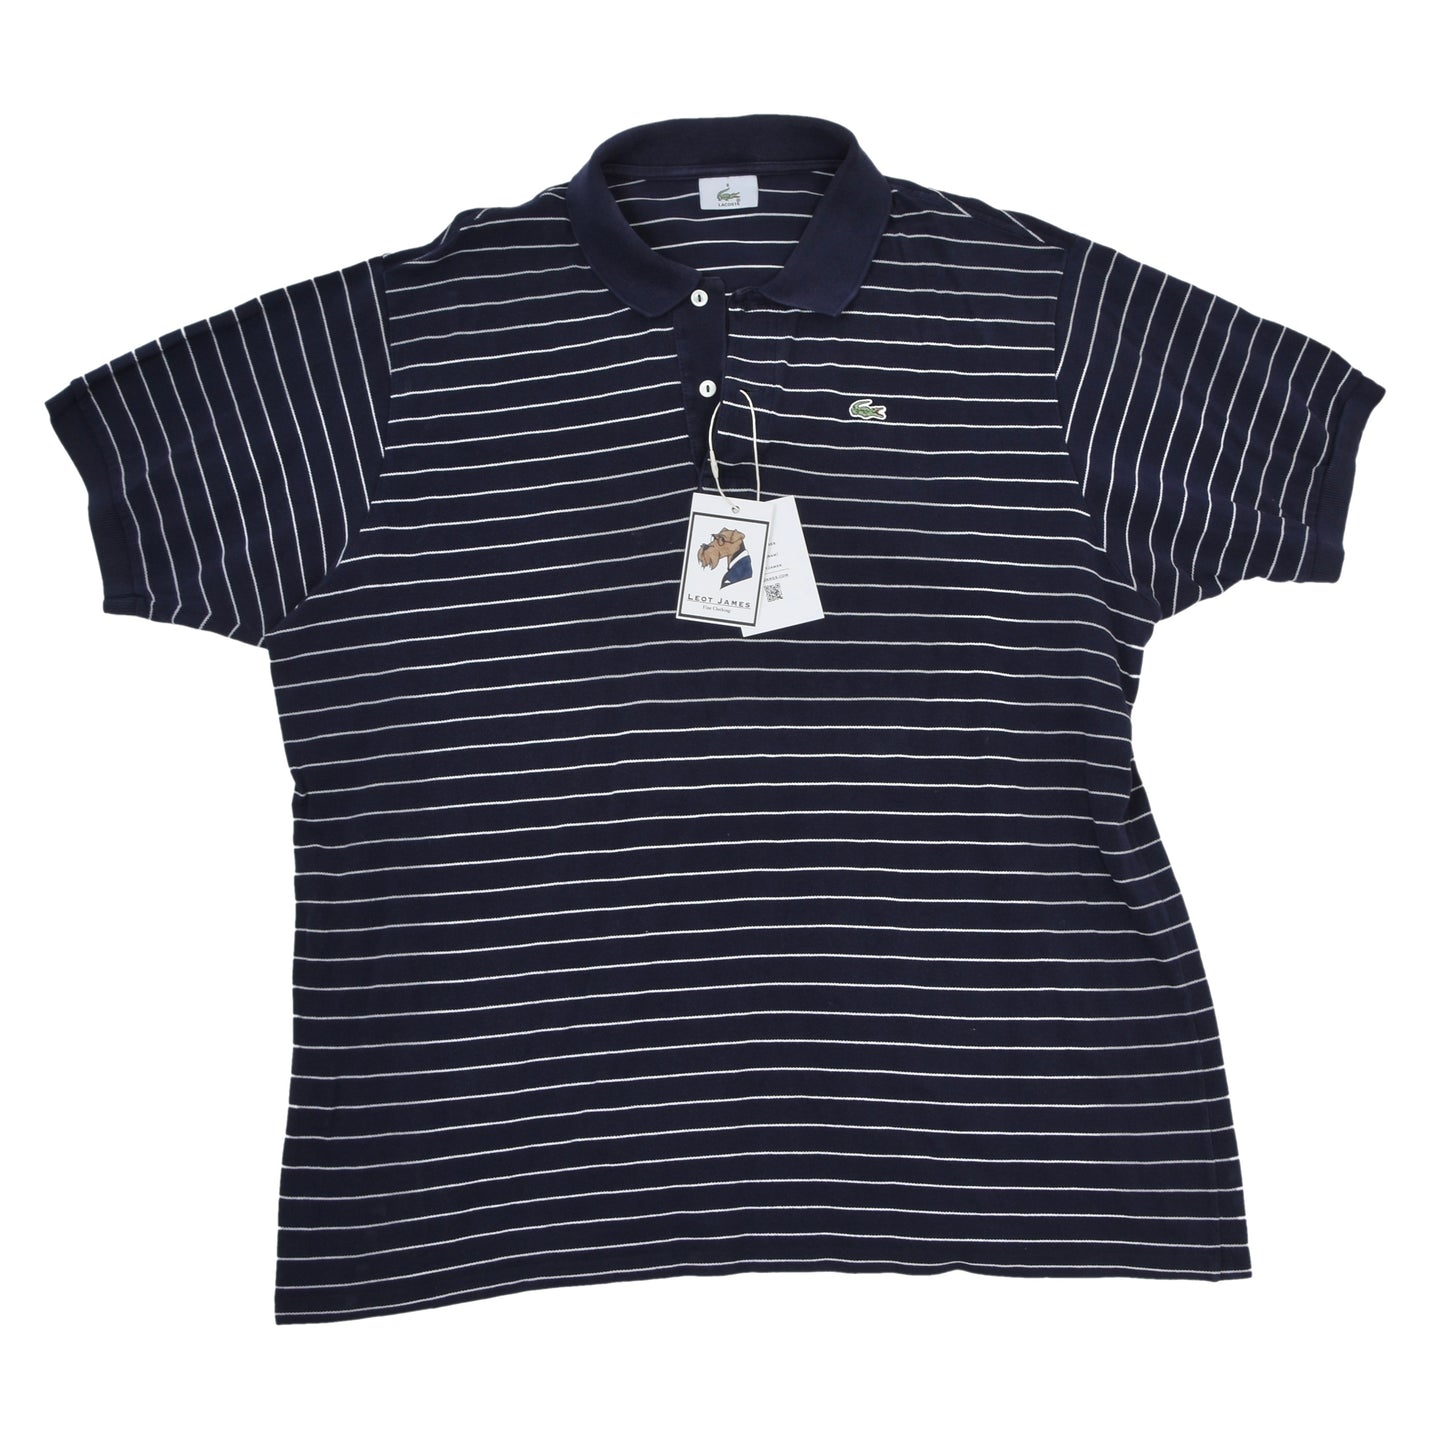 2x Vintage Lacoste Polo Shirts Größe 8 - Marineblau & rot